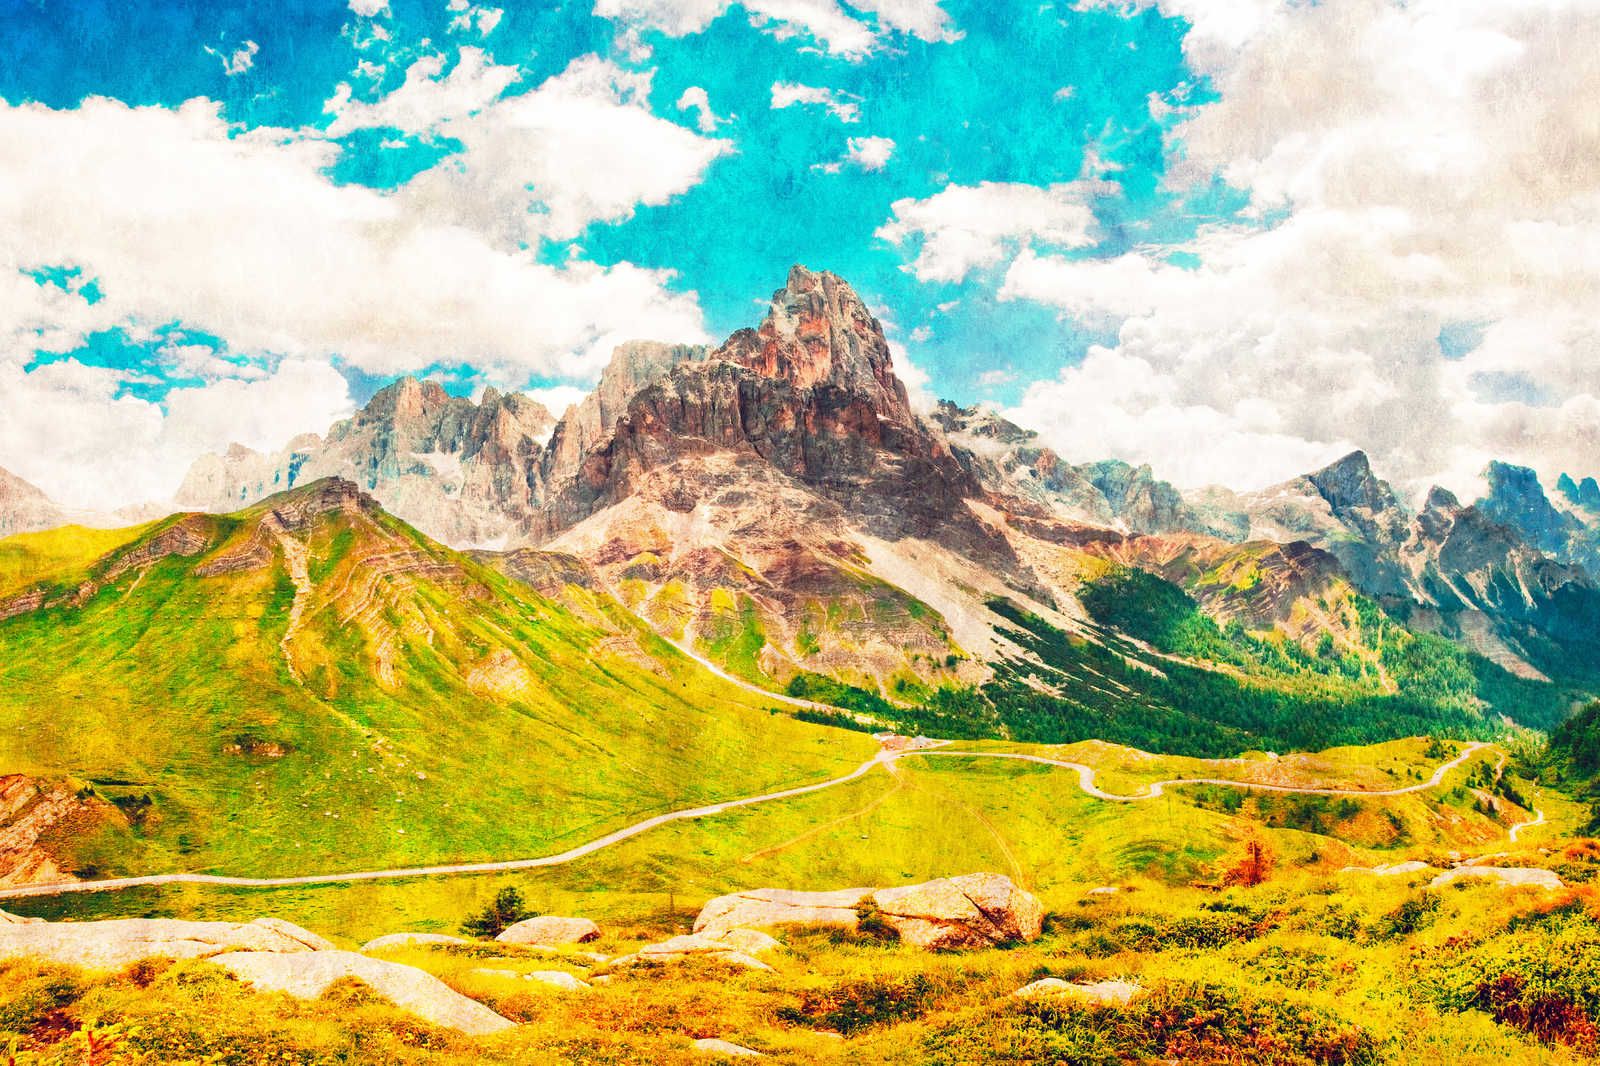             Dolomiti 1 - Leinwandbild Dolomiten Retro Fotografie – 1,20 m x 0,80 m
        